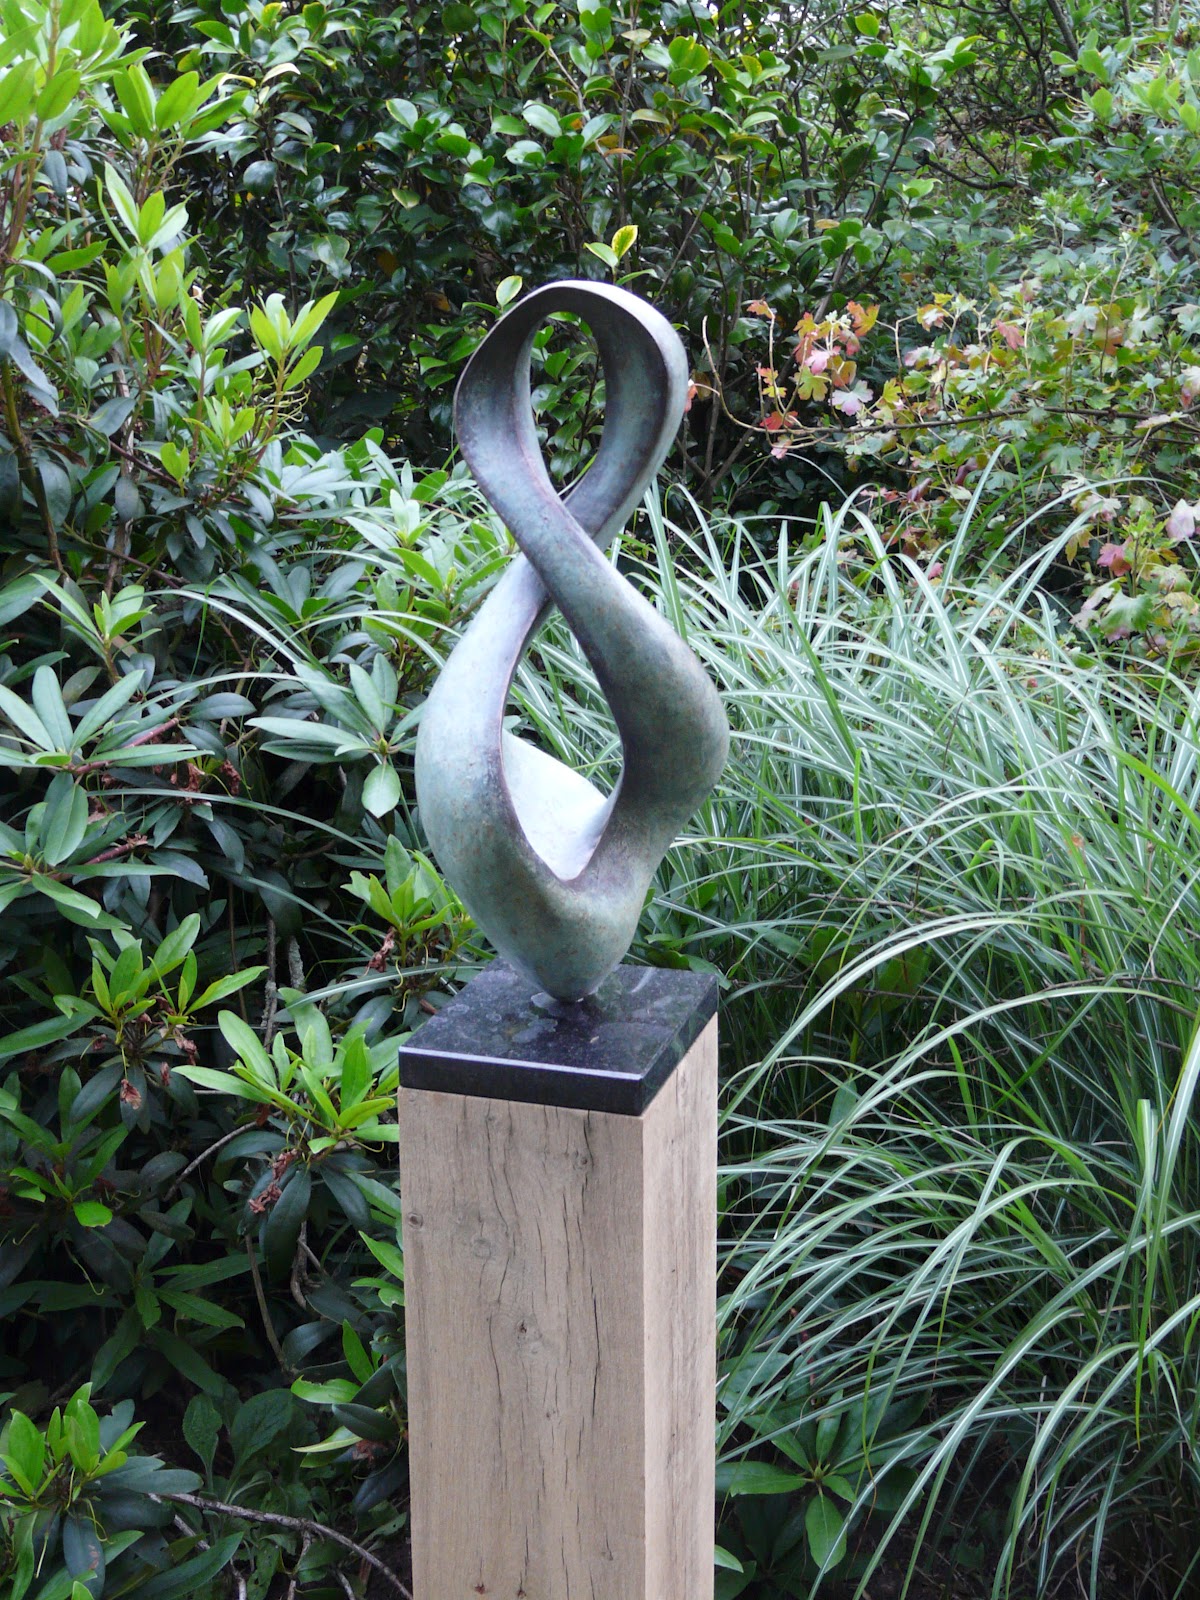 Views from the garden: Sculpture in the garden
